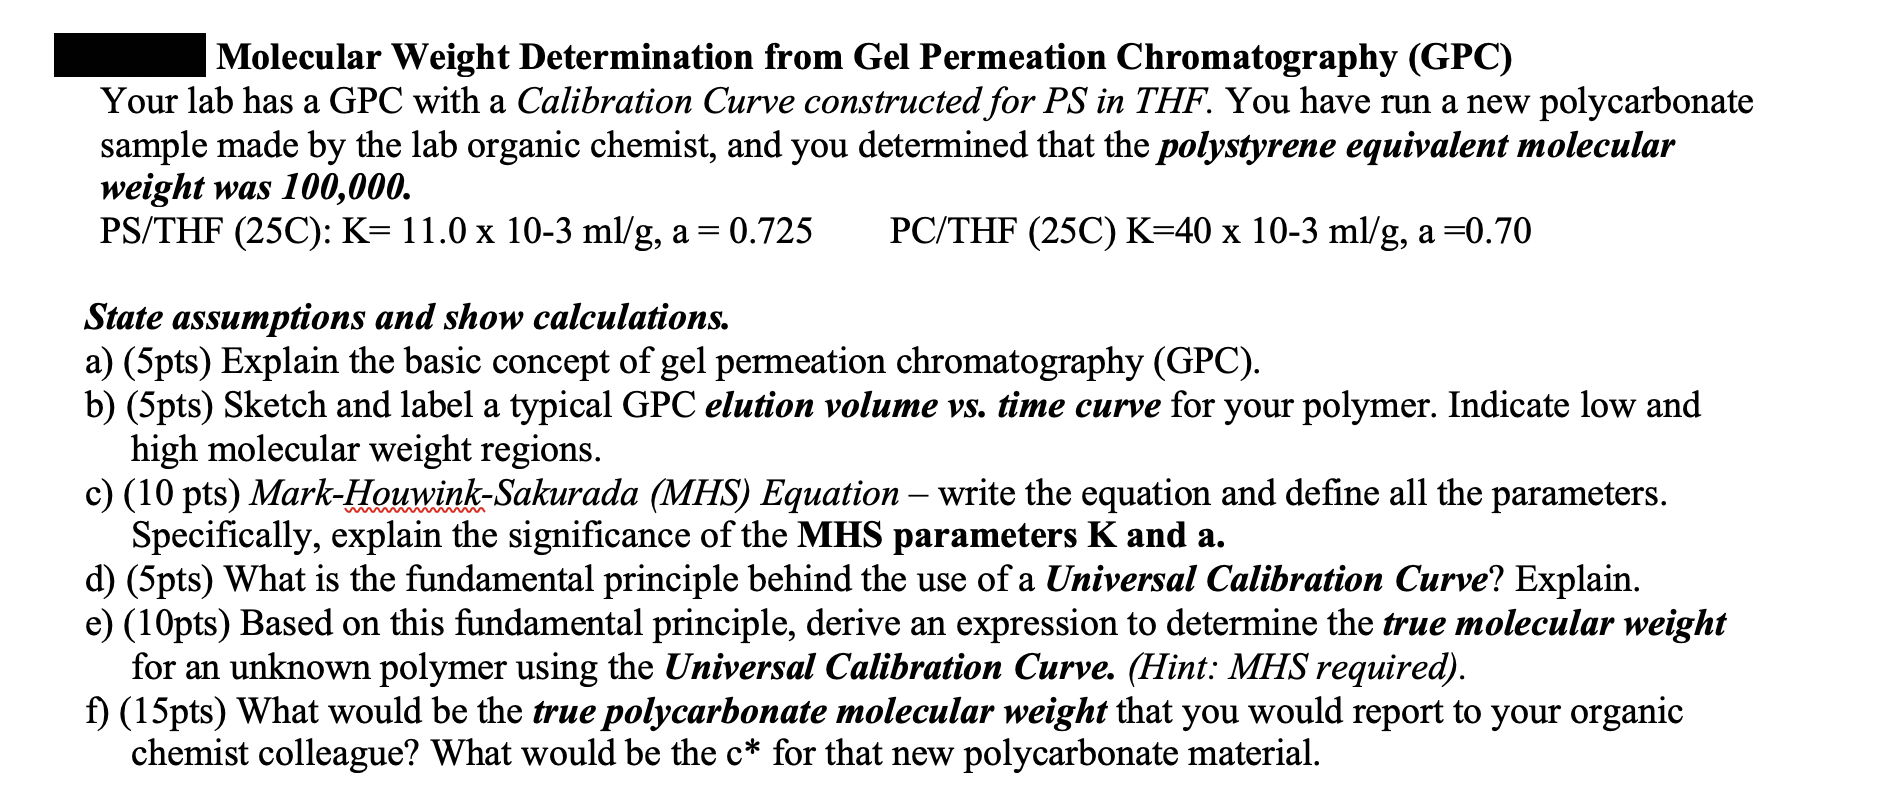 Gel Permeation Chromatography, GPC